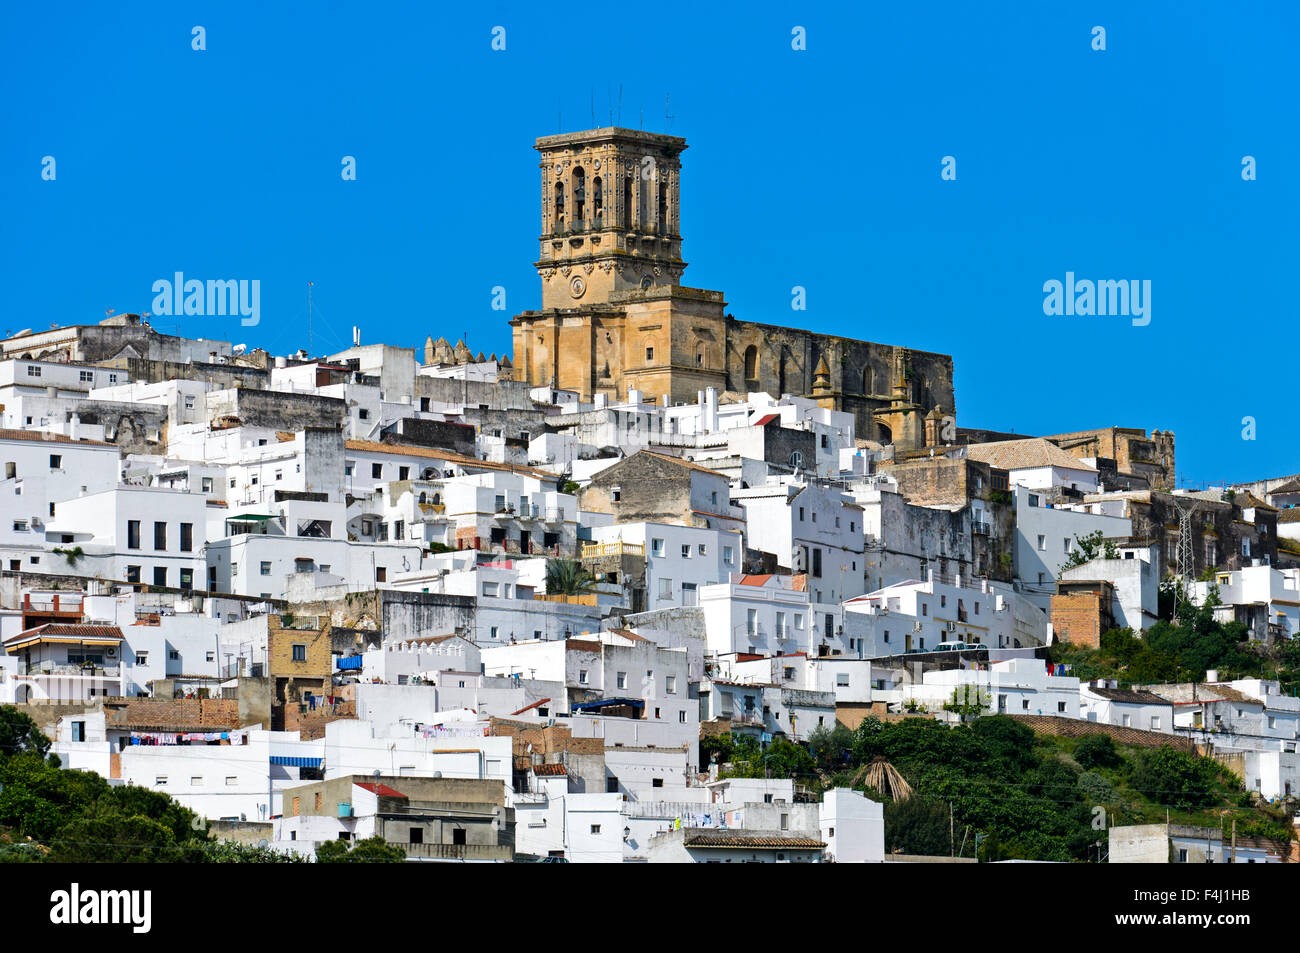 Basilica de Santa Maria de la Asuncion rises above the White Town, of Arcos de la Frontera, Andalusia, Spain Stock Photo